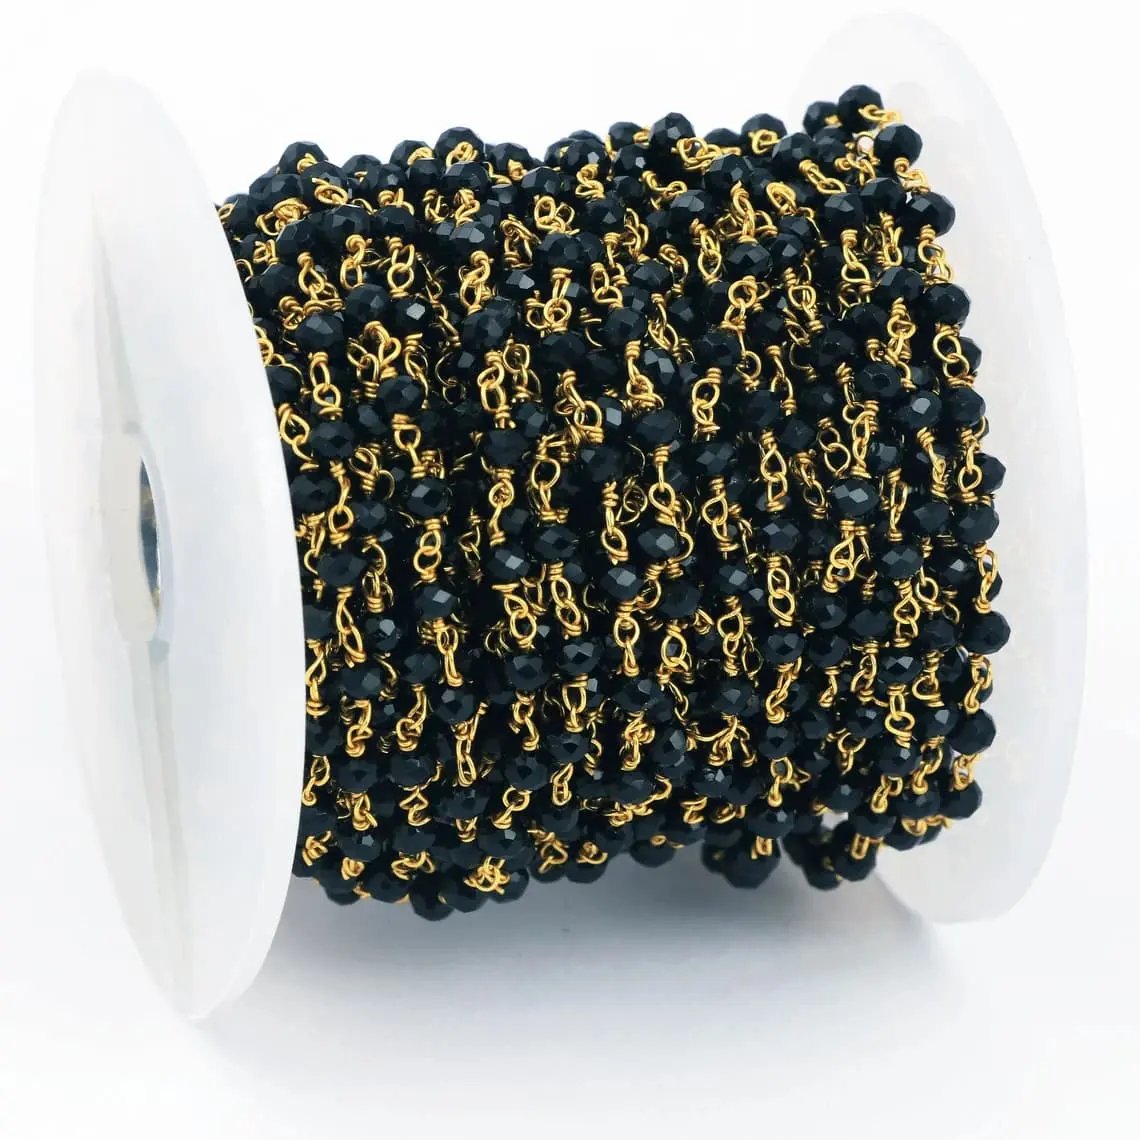 Rosário de contas Rondelle Hydro facetado ônix preto 3-3.5mm, corrente de contas banhada a ouro amarelo para fazer joias